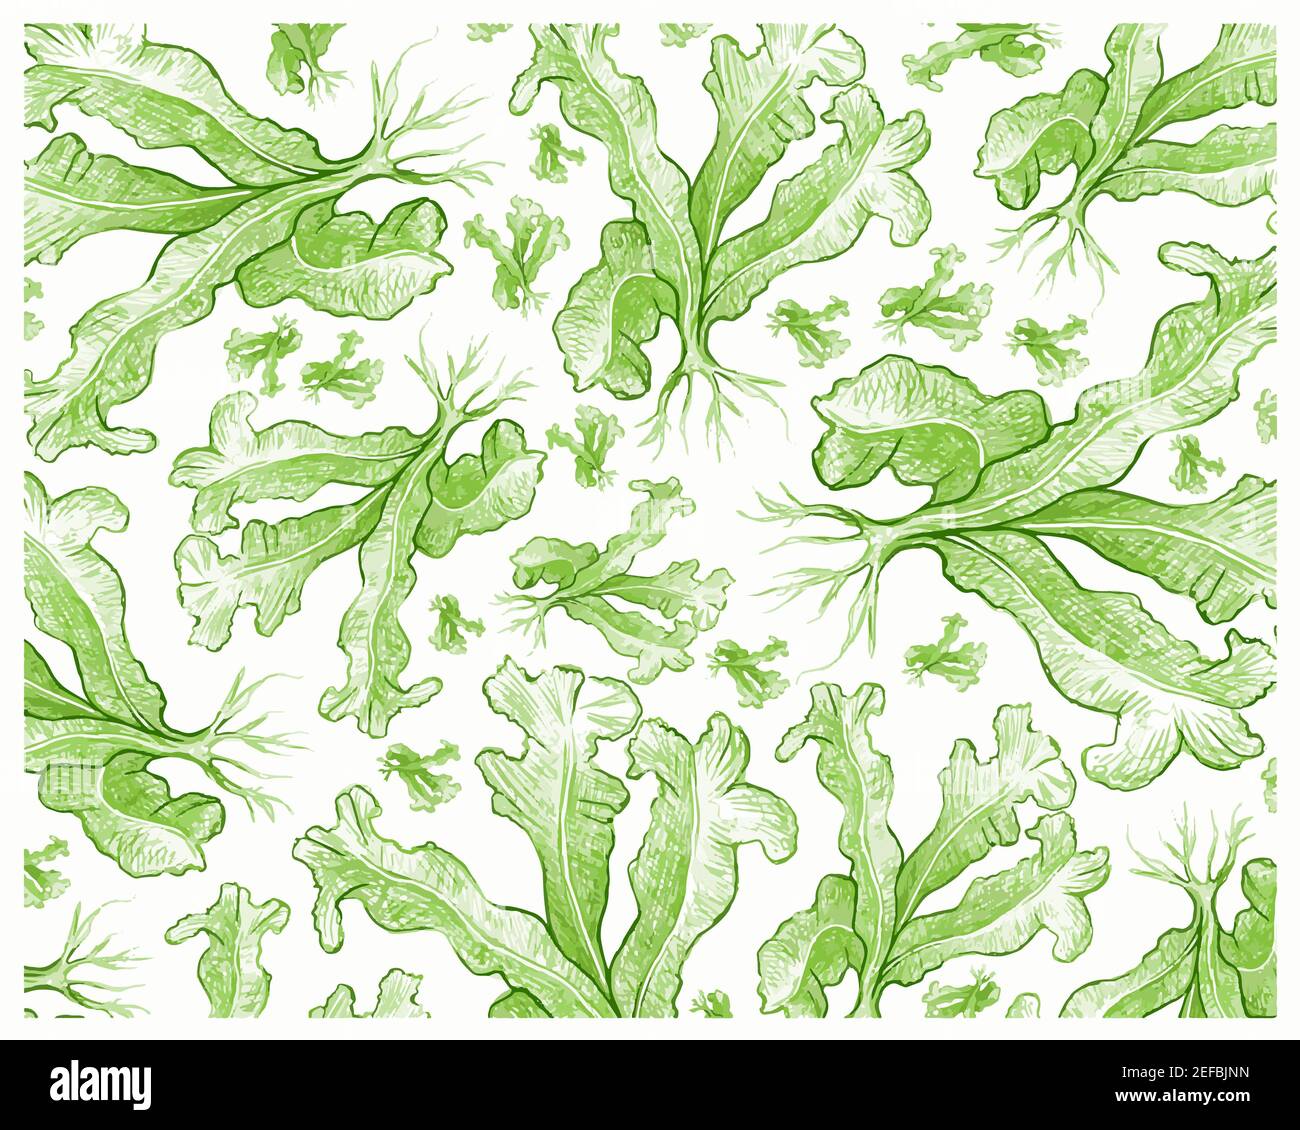 Illustration Background of Green Bird's Nest Fern or Asplenium Nidus Plants for Garden Decoration. Stock Photo